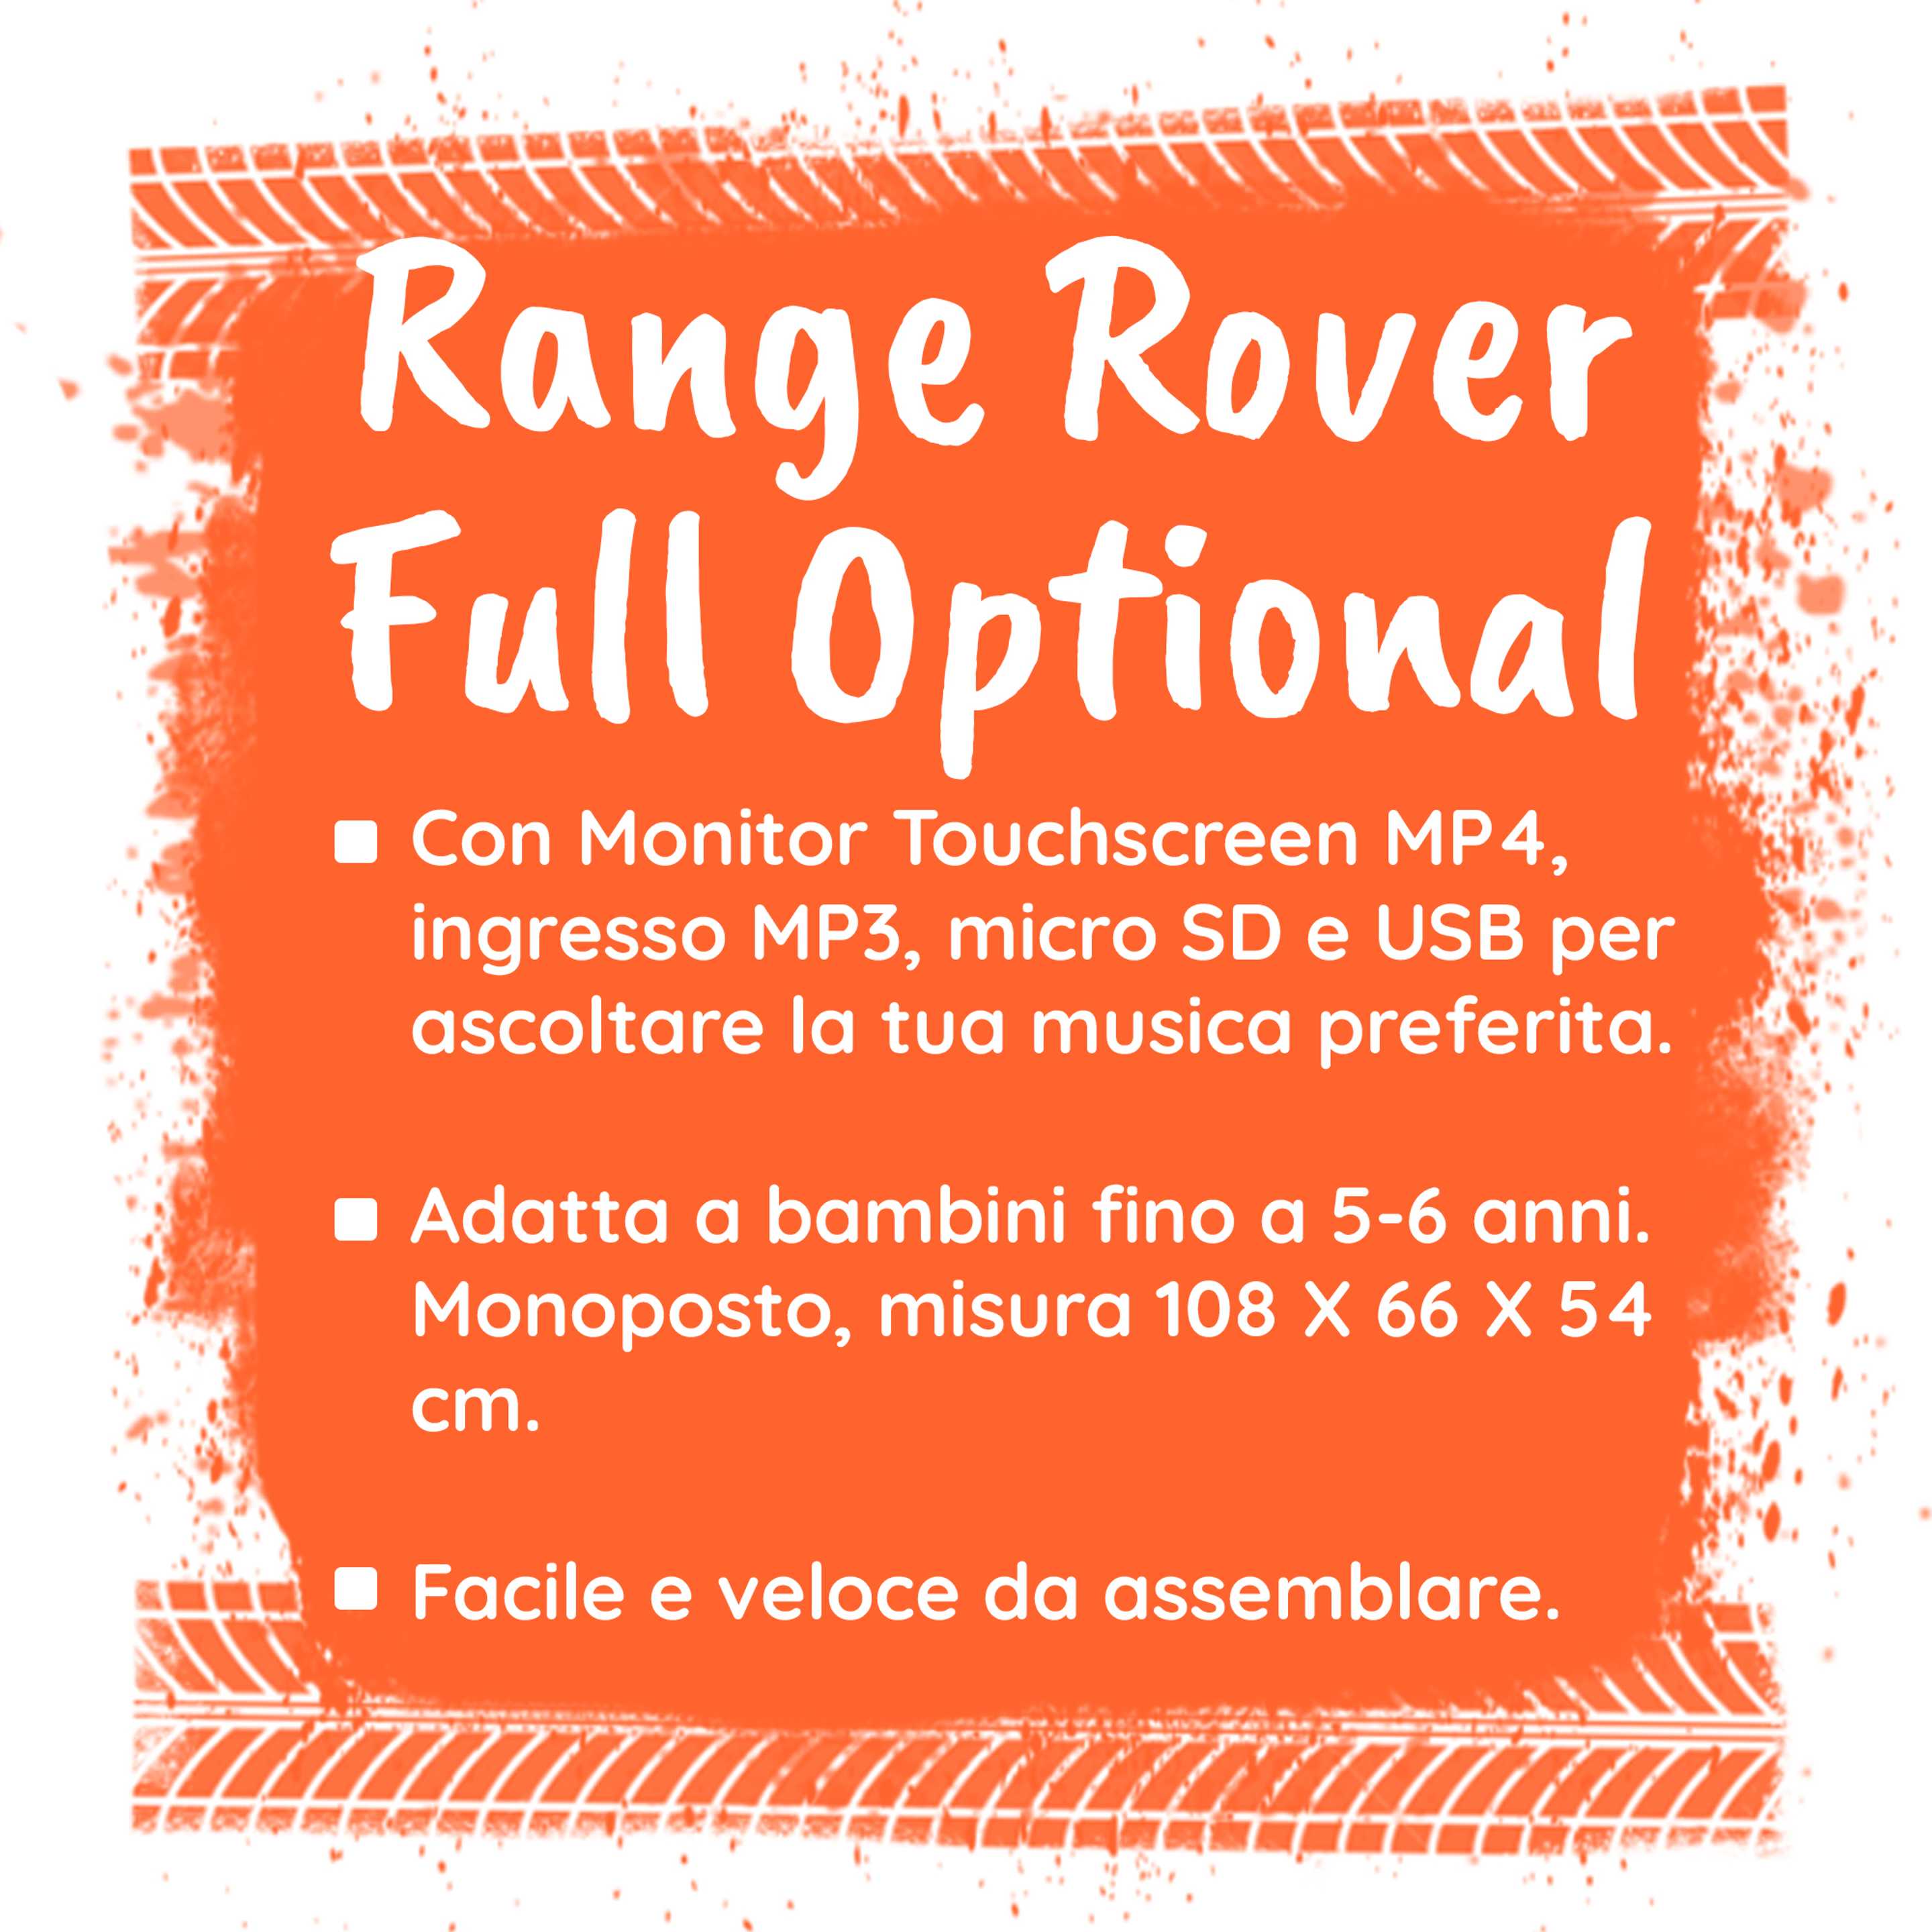 Range rover giocattolo full optional 